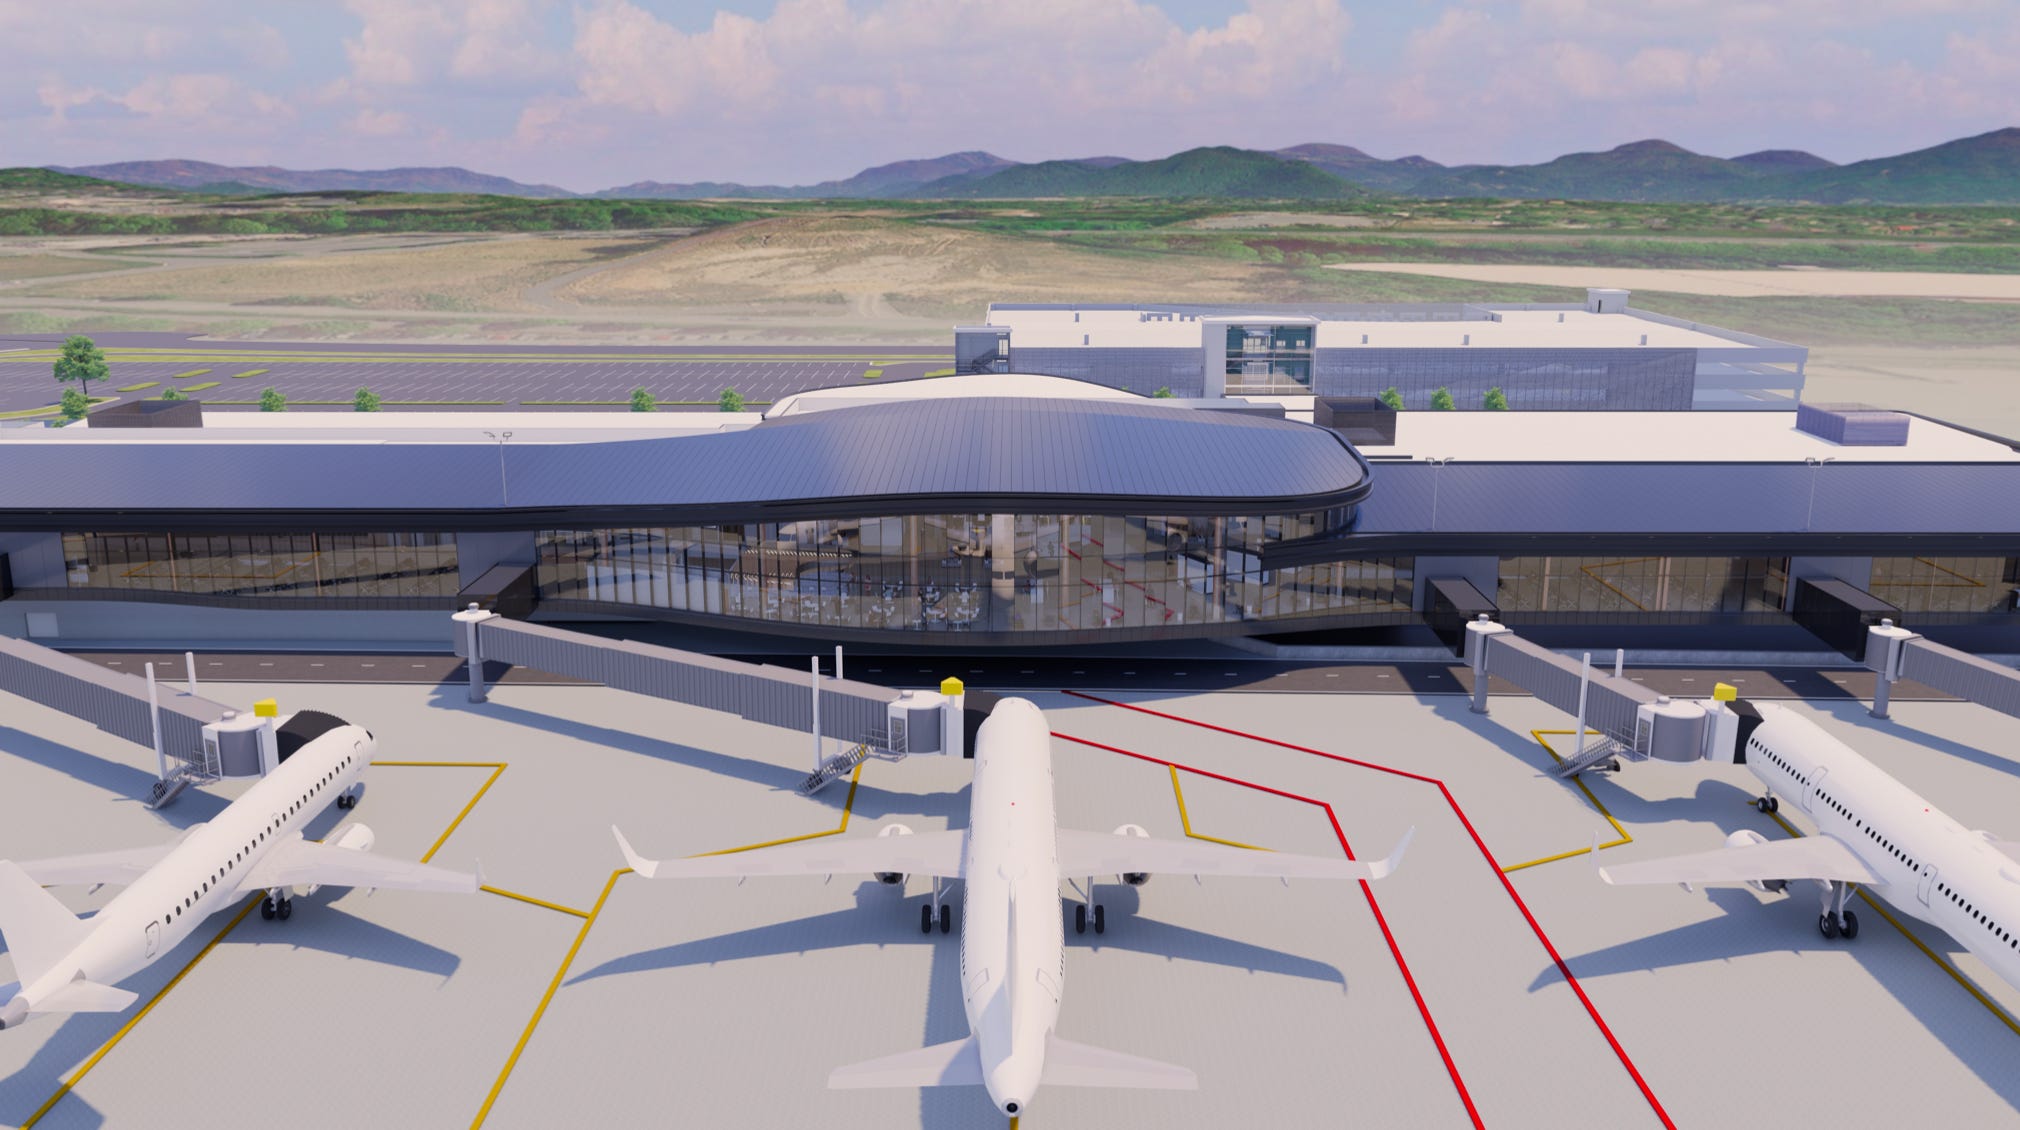 Envisioning Asheville Regional Airport circa 2026 12 gates, 2 million